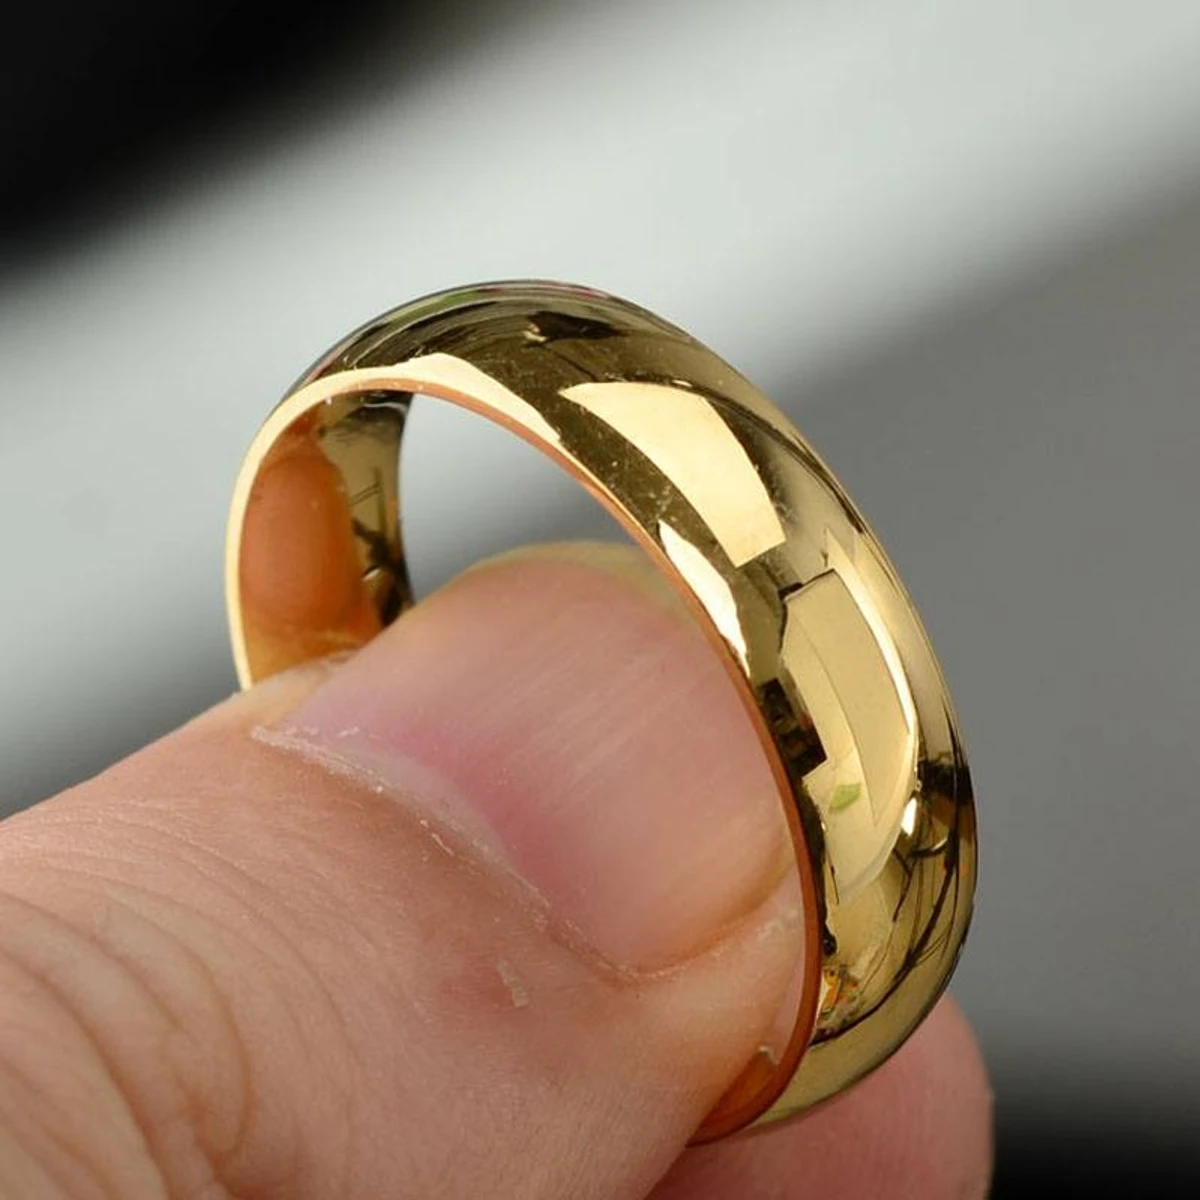 Stainless Steel Rings for Men Fashion Round Finger Ring